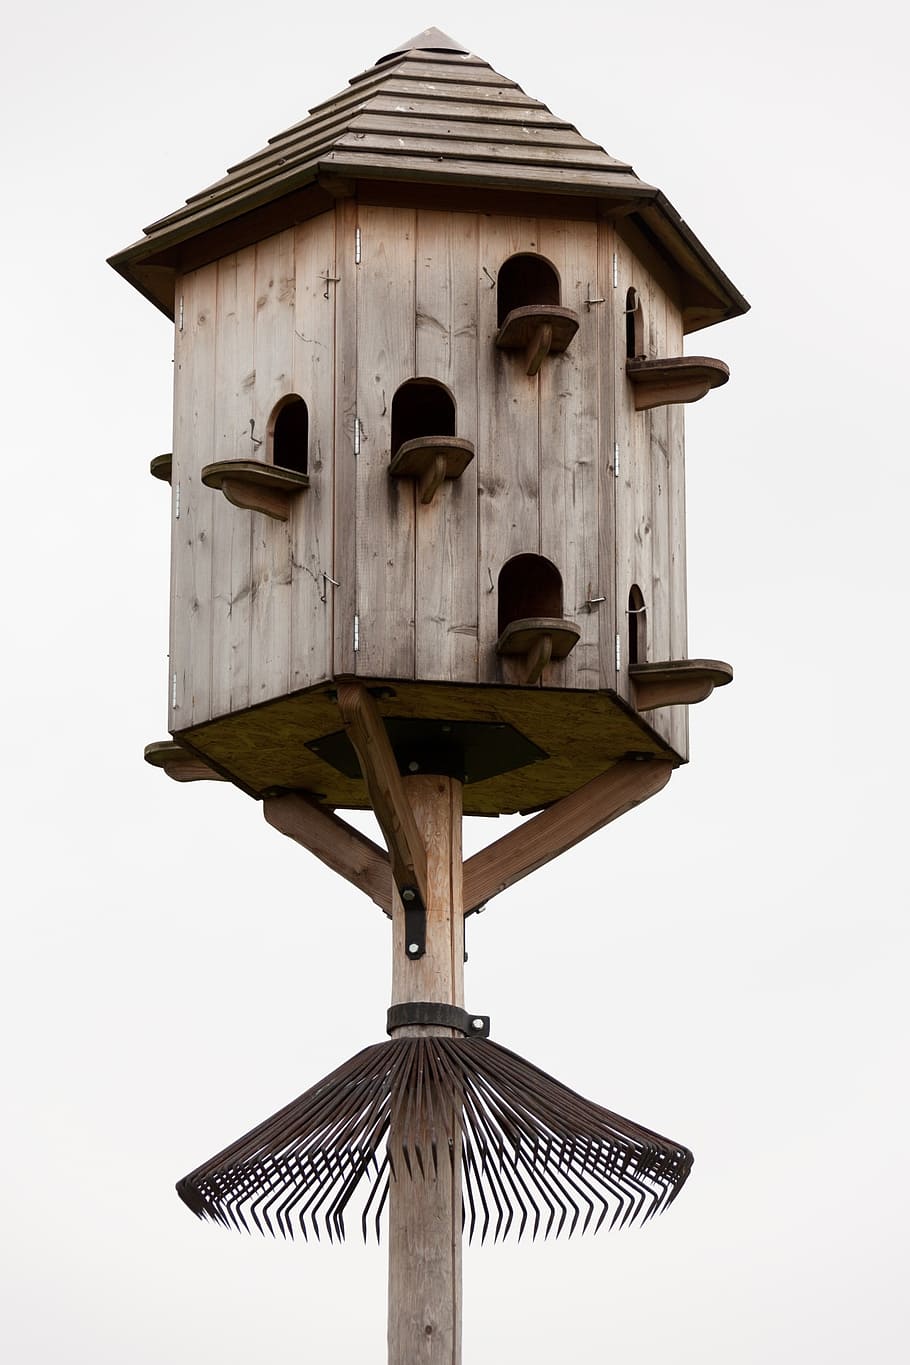 pomba, de madeira, casa, pombo, caixa, casa de pássaros, isolado, buracos, abrigo, pássaro